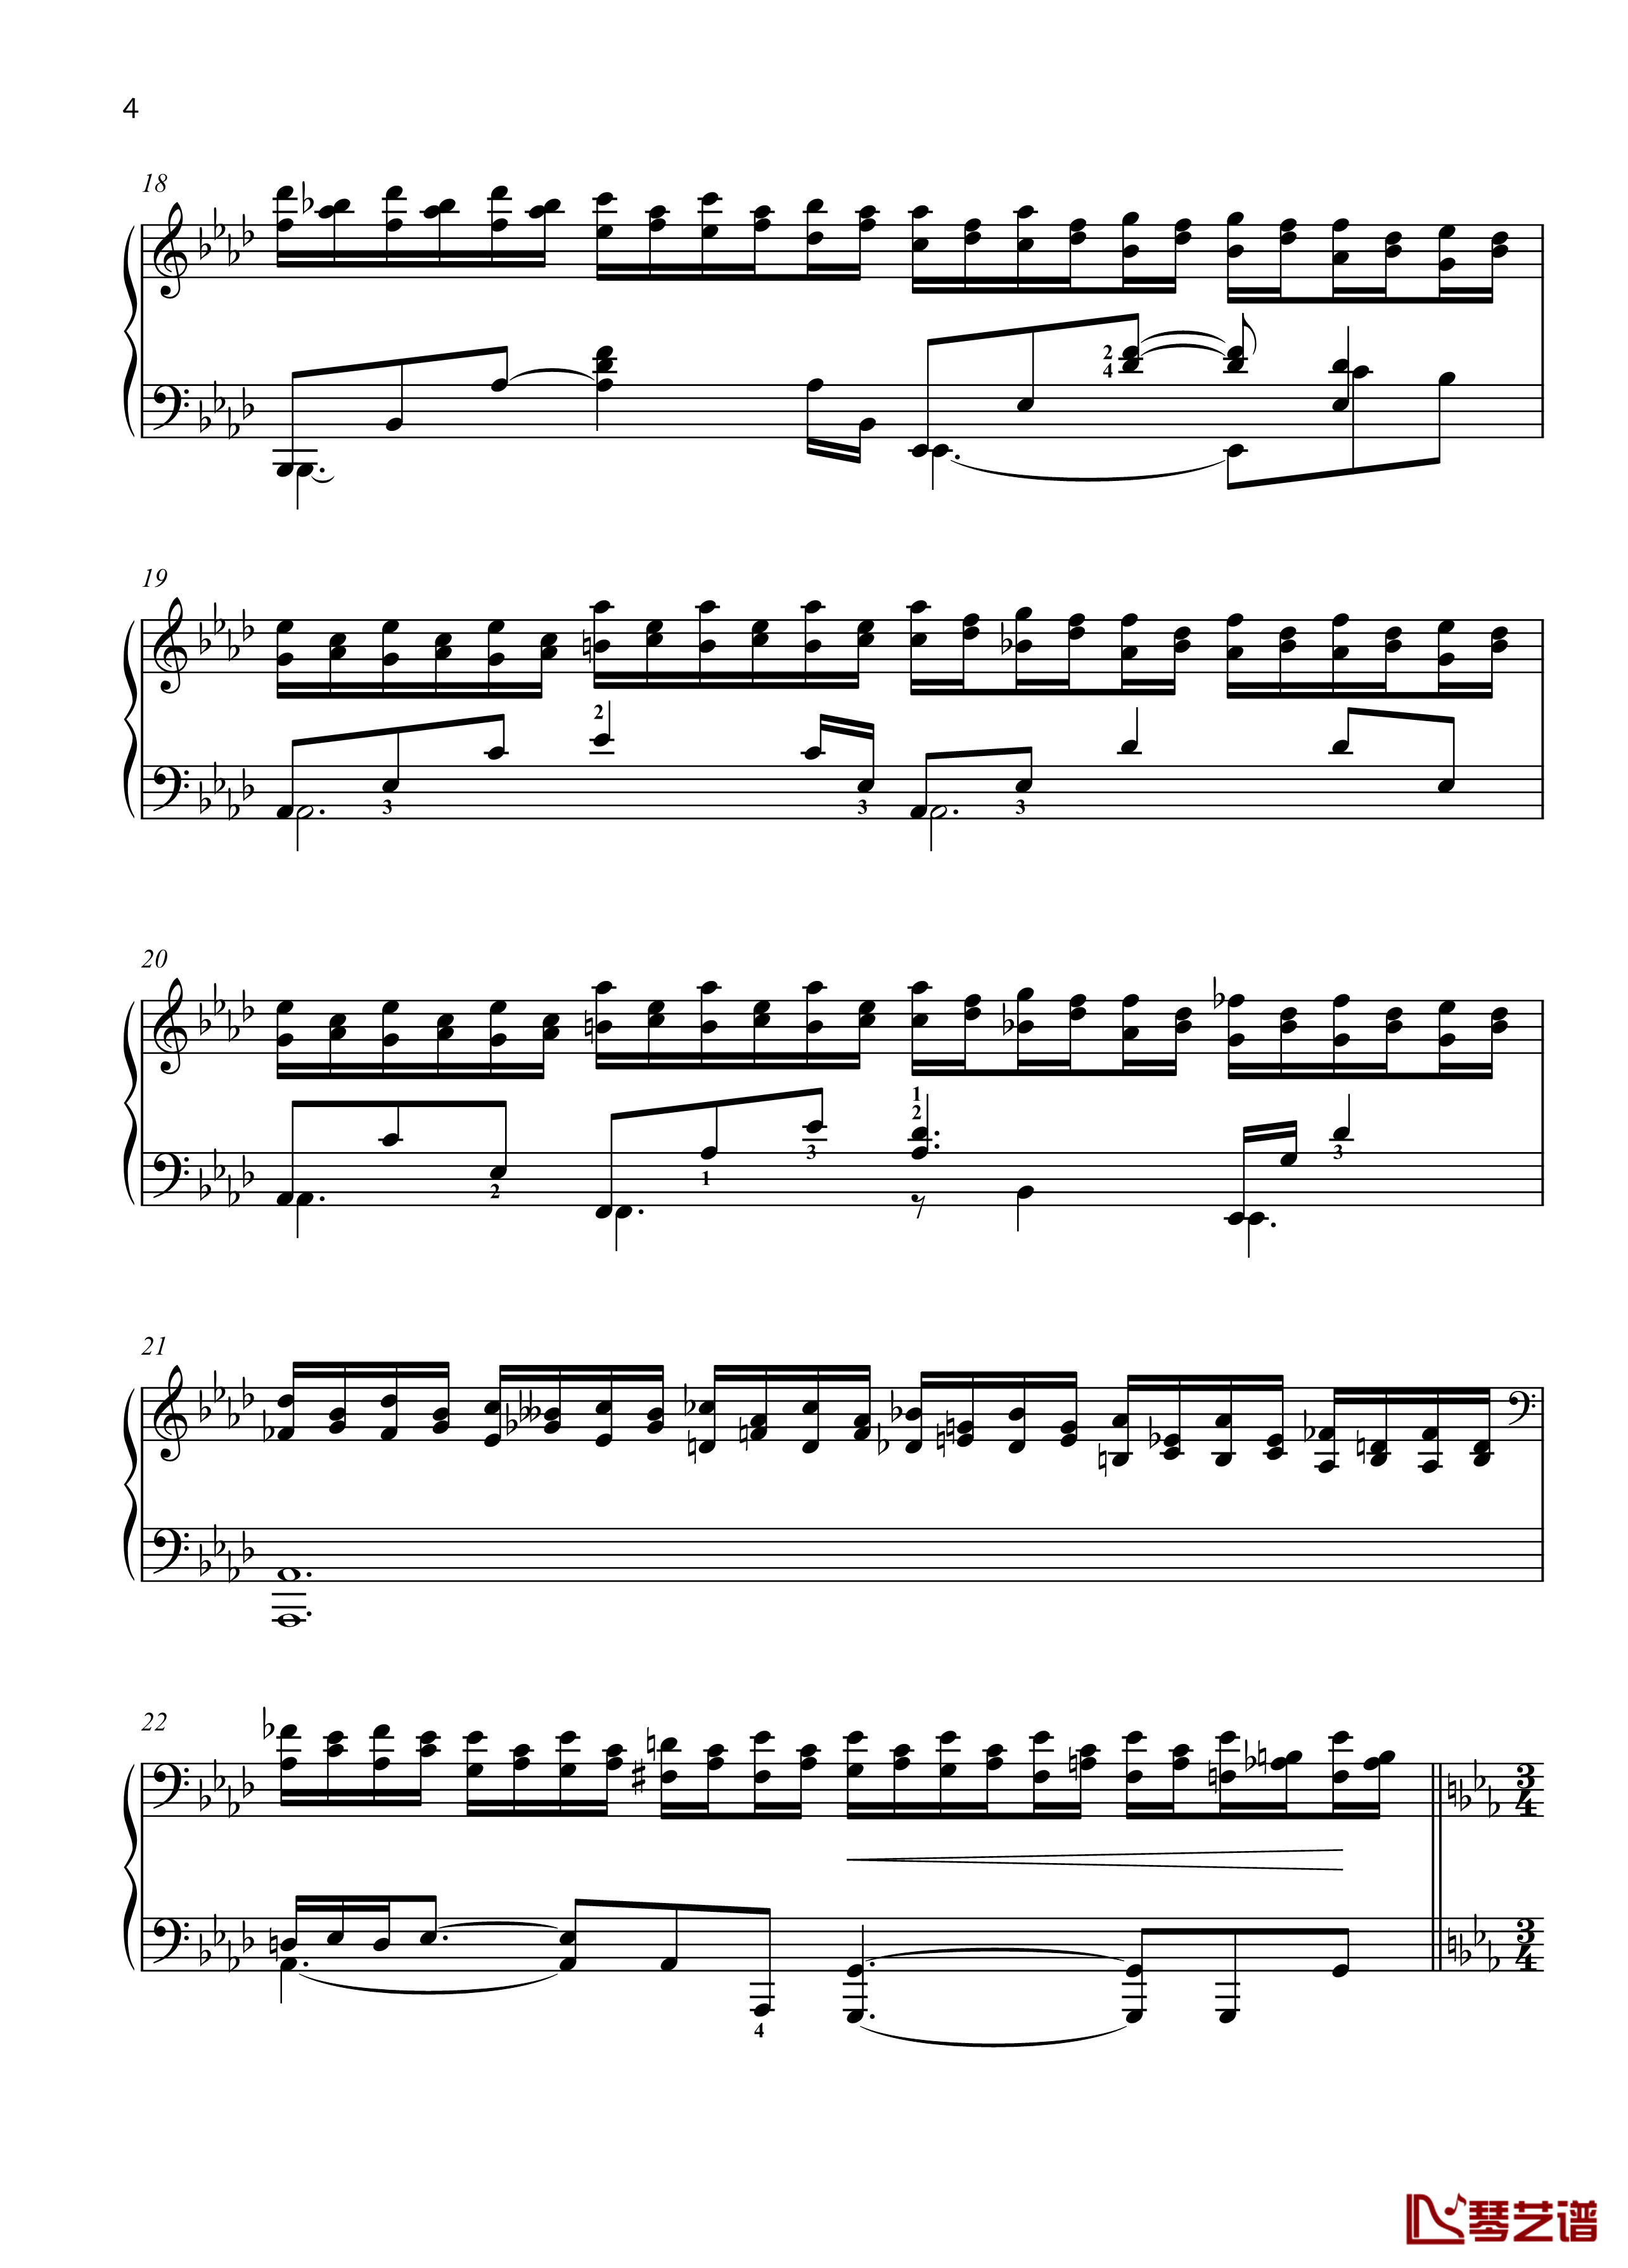 No. 2. Dream. Moderato钢琴谱-带指法- 八首音乐会练习曲 Eight Concert ?tudes Op 40 -爵士-尼古拉·凯帕斯汀4